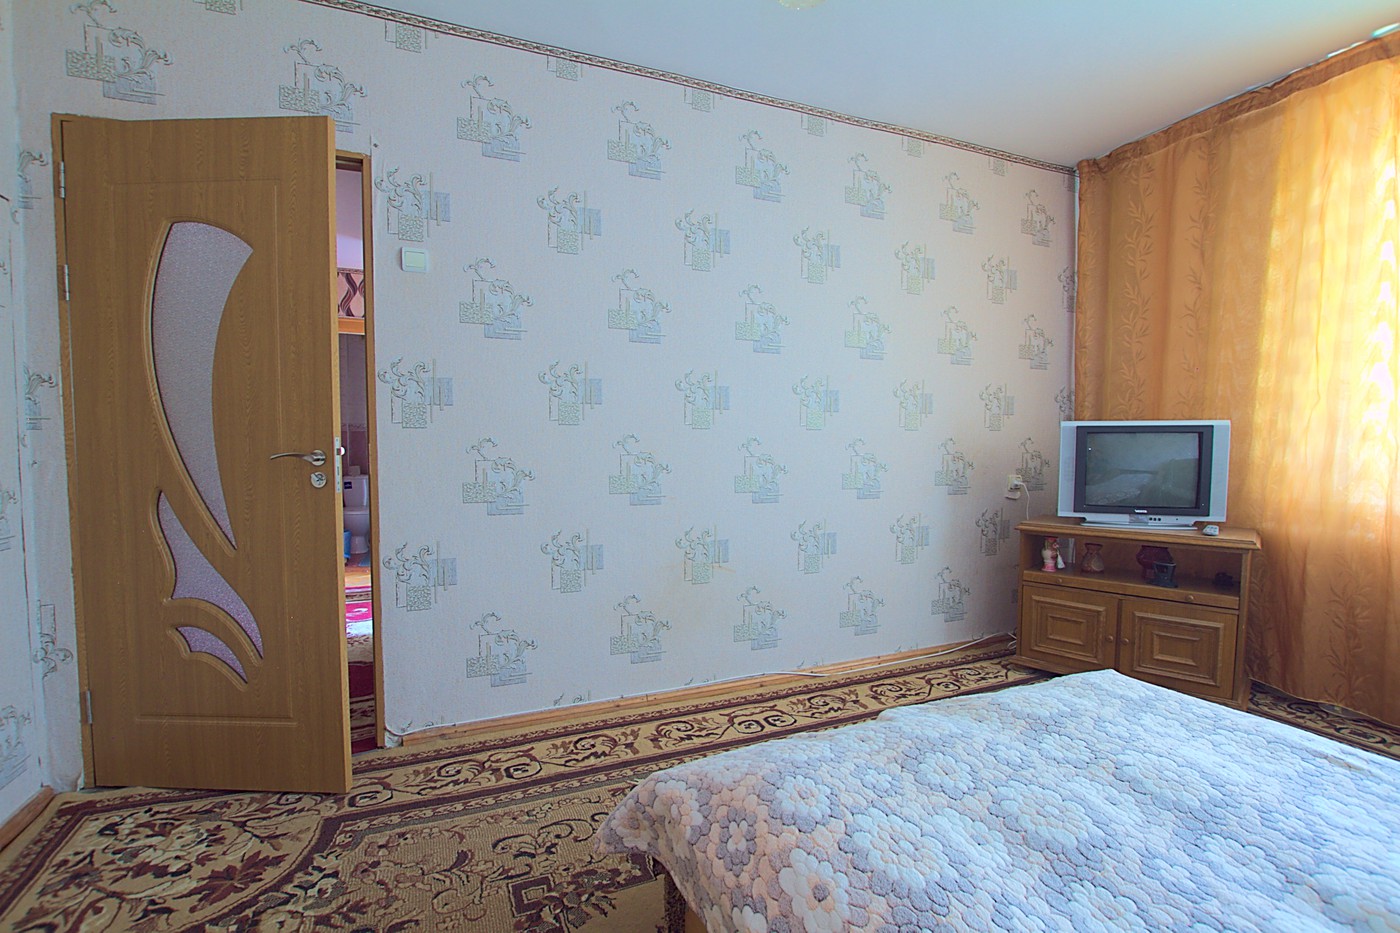 Chisinau, Riscani. Alquiler barato cerca de McDonald: 2 habitaciones, 1 cuarto, 48 m²